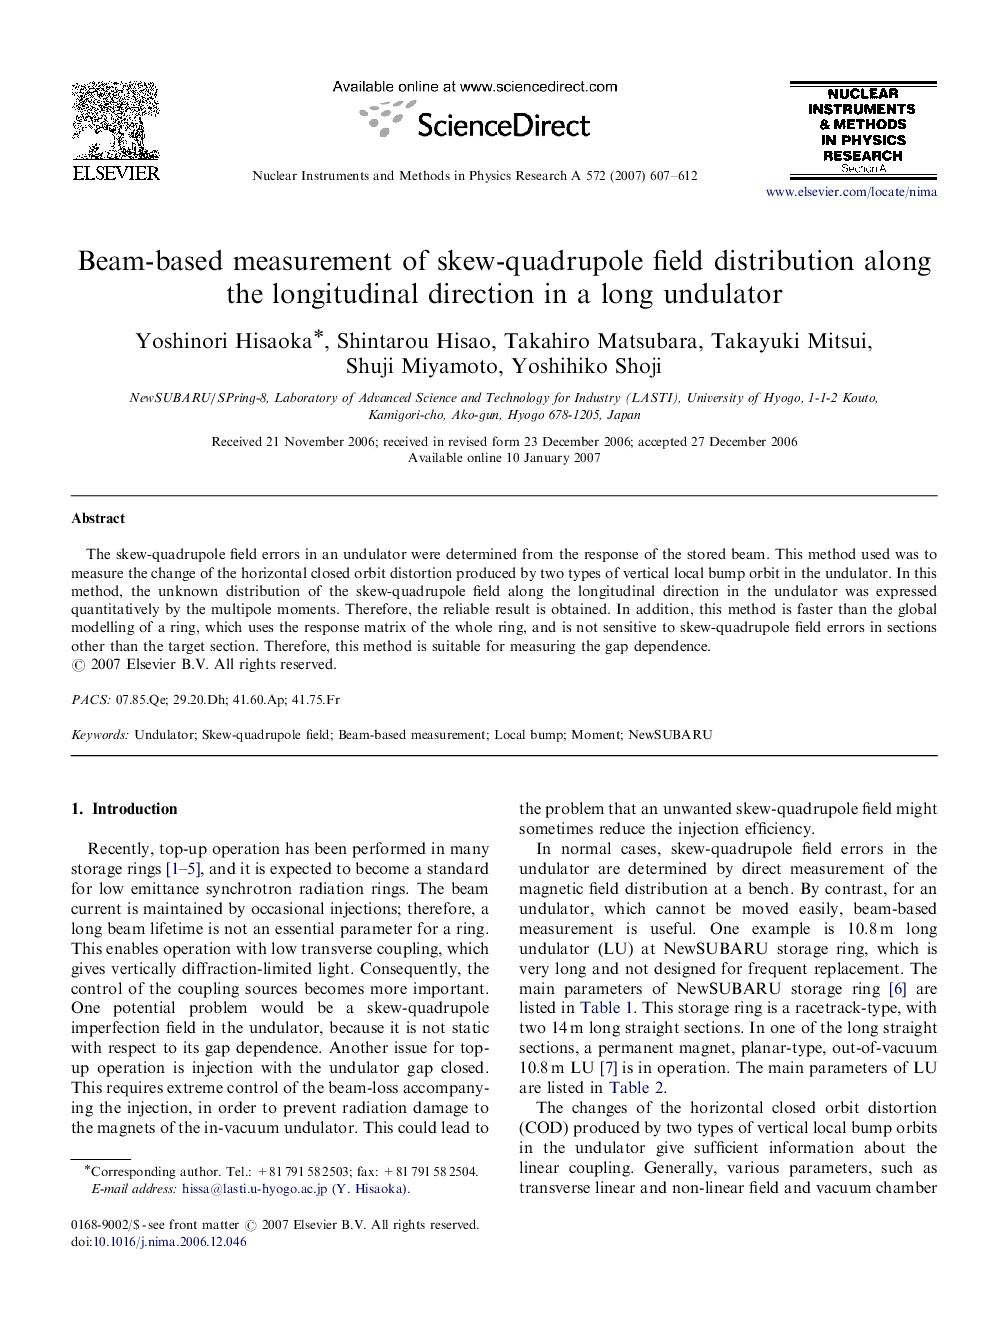 Beam-based measurement of skew-quadrupole field distribution along the longitudinal direction in a long undulator